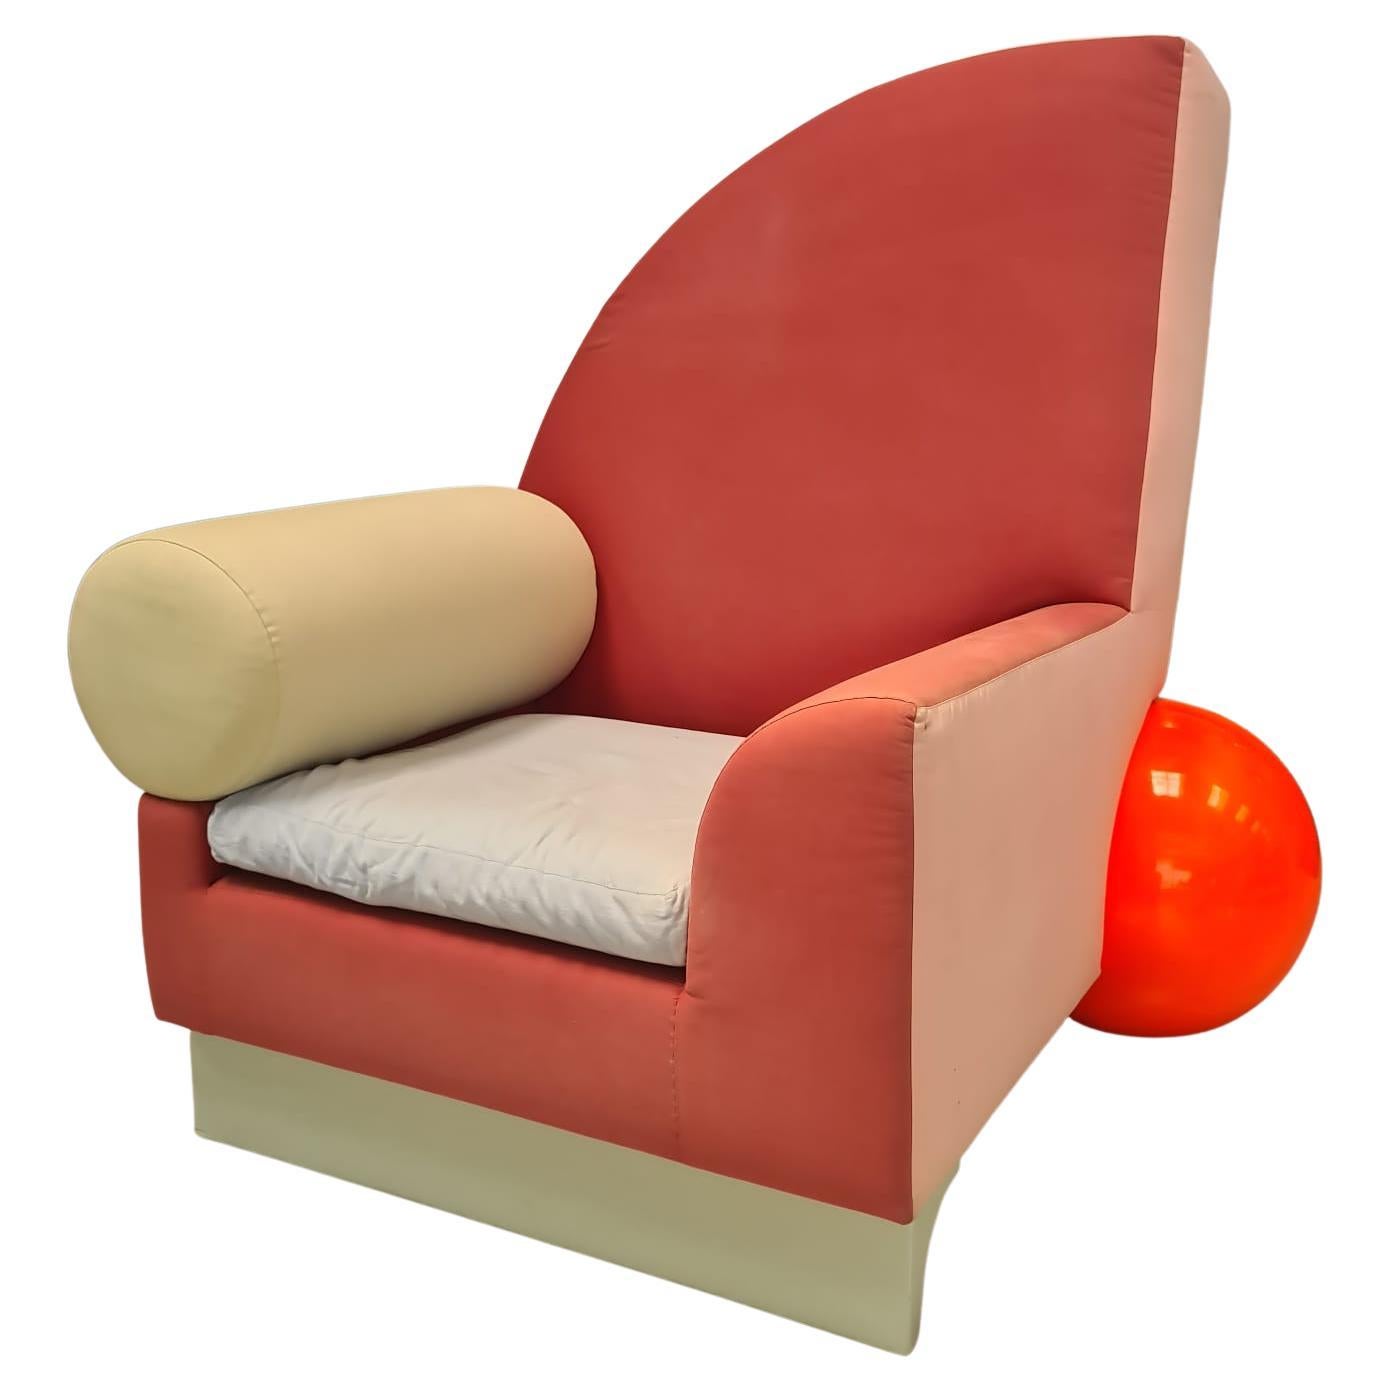 Bel Air-Sessel von Peter Shire, Memphis Milano im Angebot